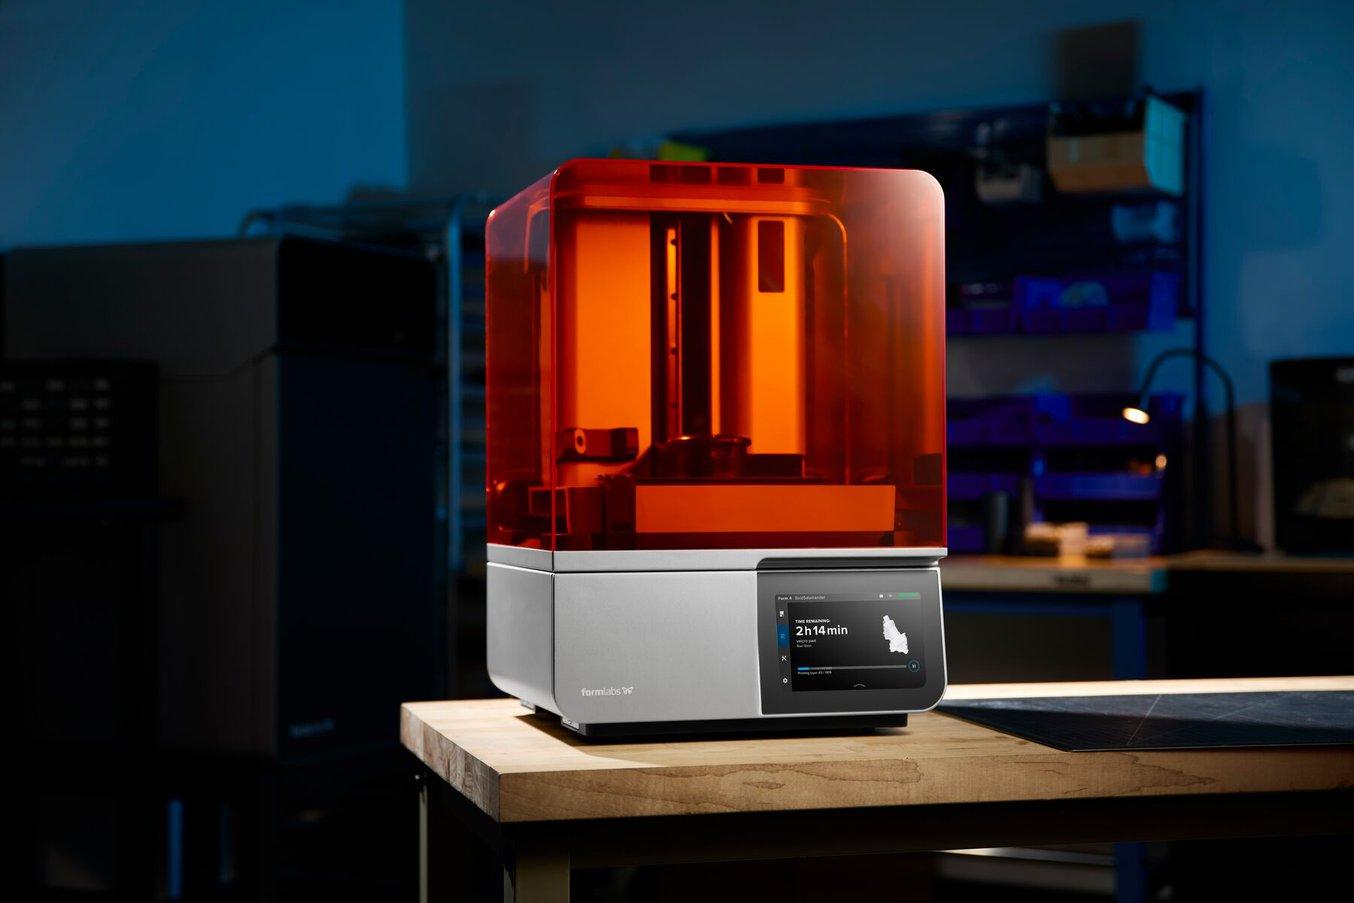 der Form 4, Formlabs' branchenführender Stereolithografie-3D-Drucker